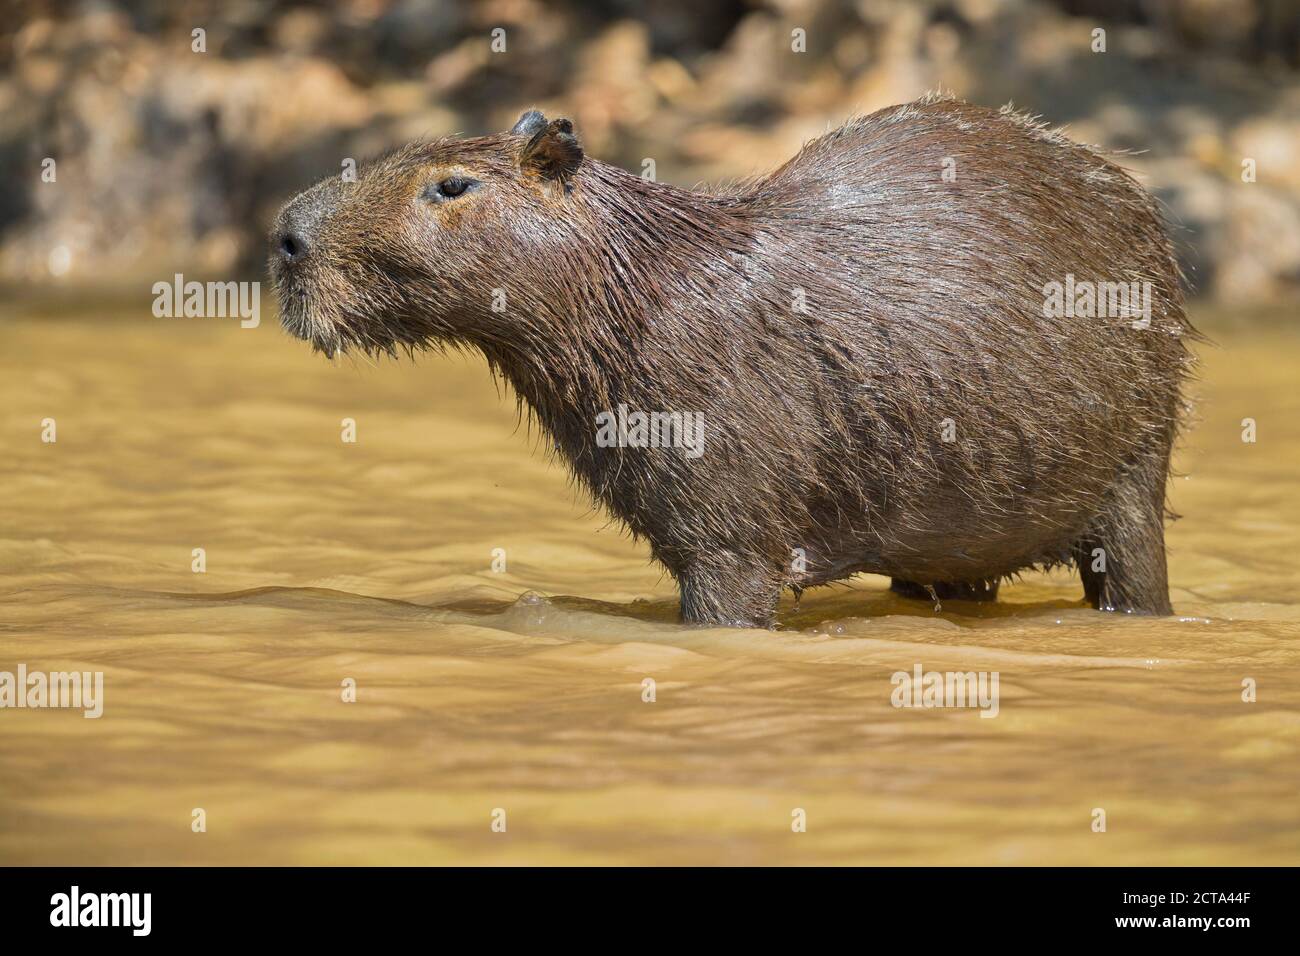 South America, Brasilia, Mato Grosso do Sul, Pantanal, Cuiaba River, Capybara, Hydrochoerus hydrochaeris Stock Photo